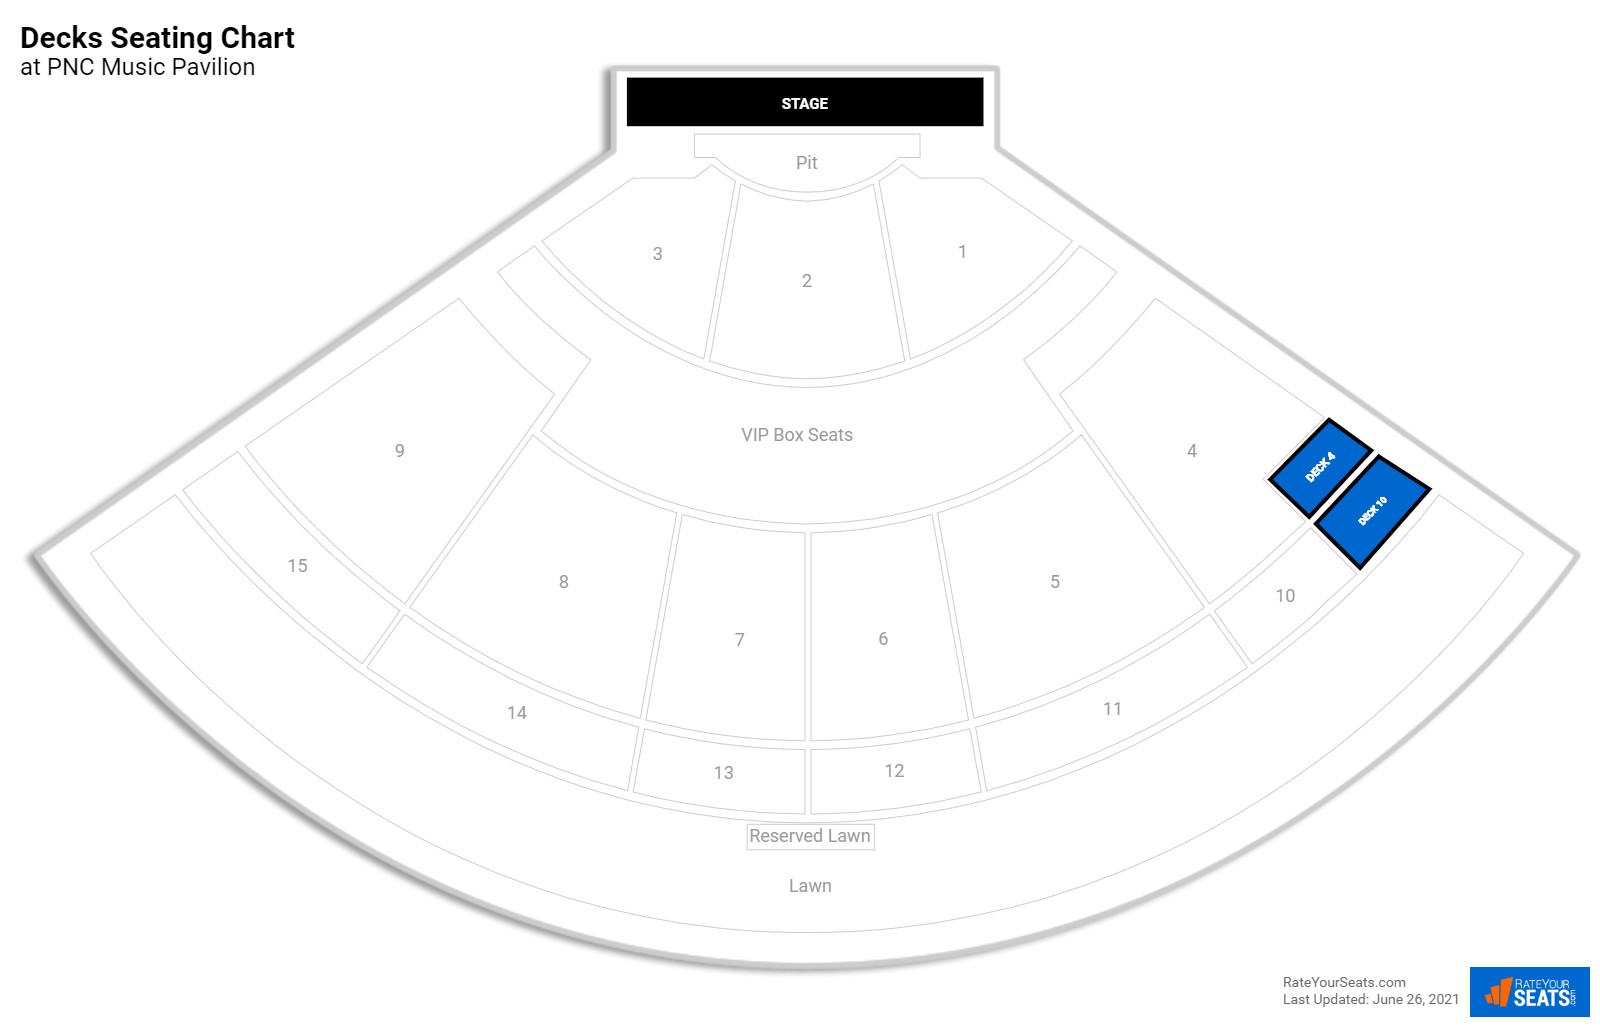 Concert Decks Seating Chart at PNC Music Pavilion